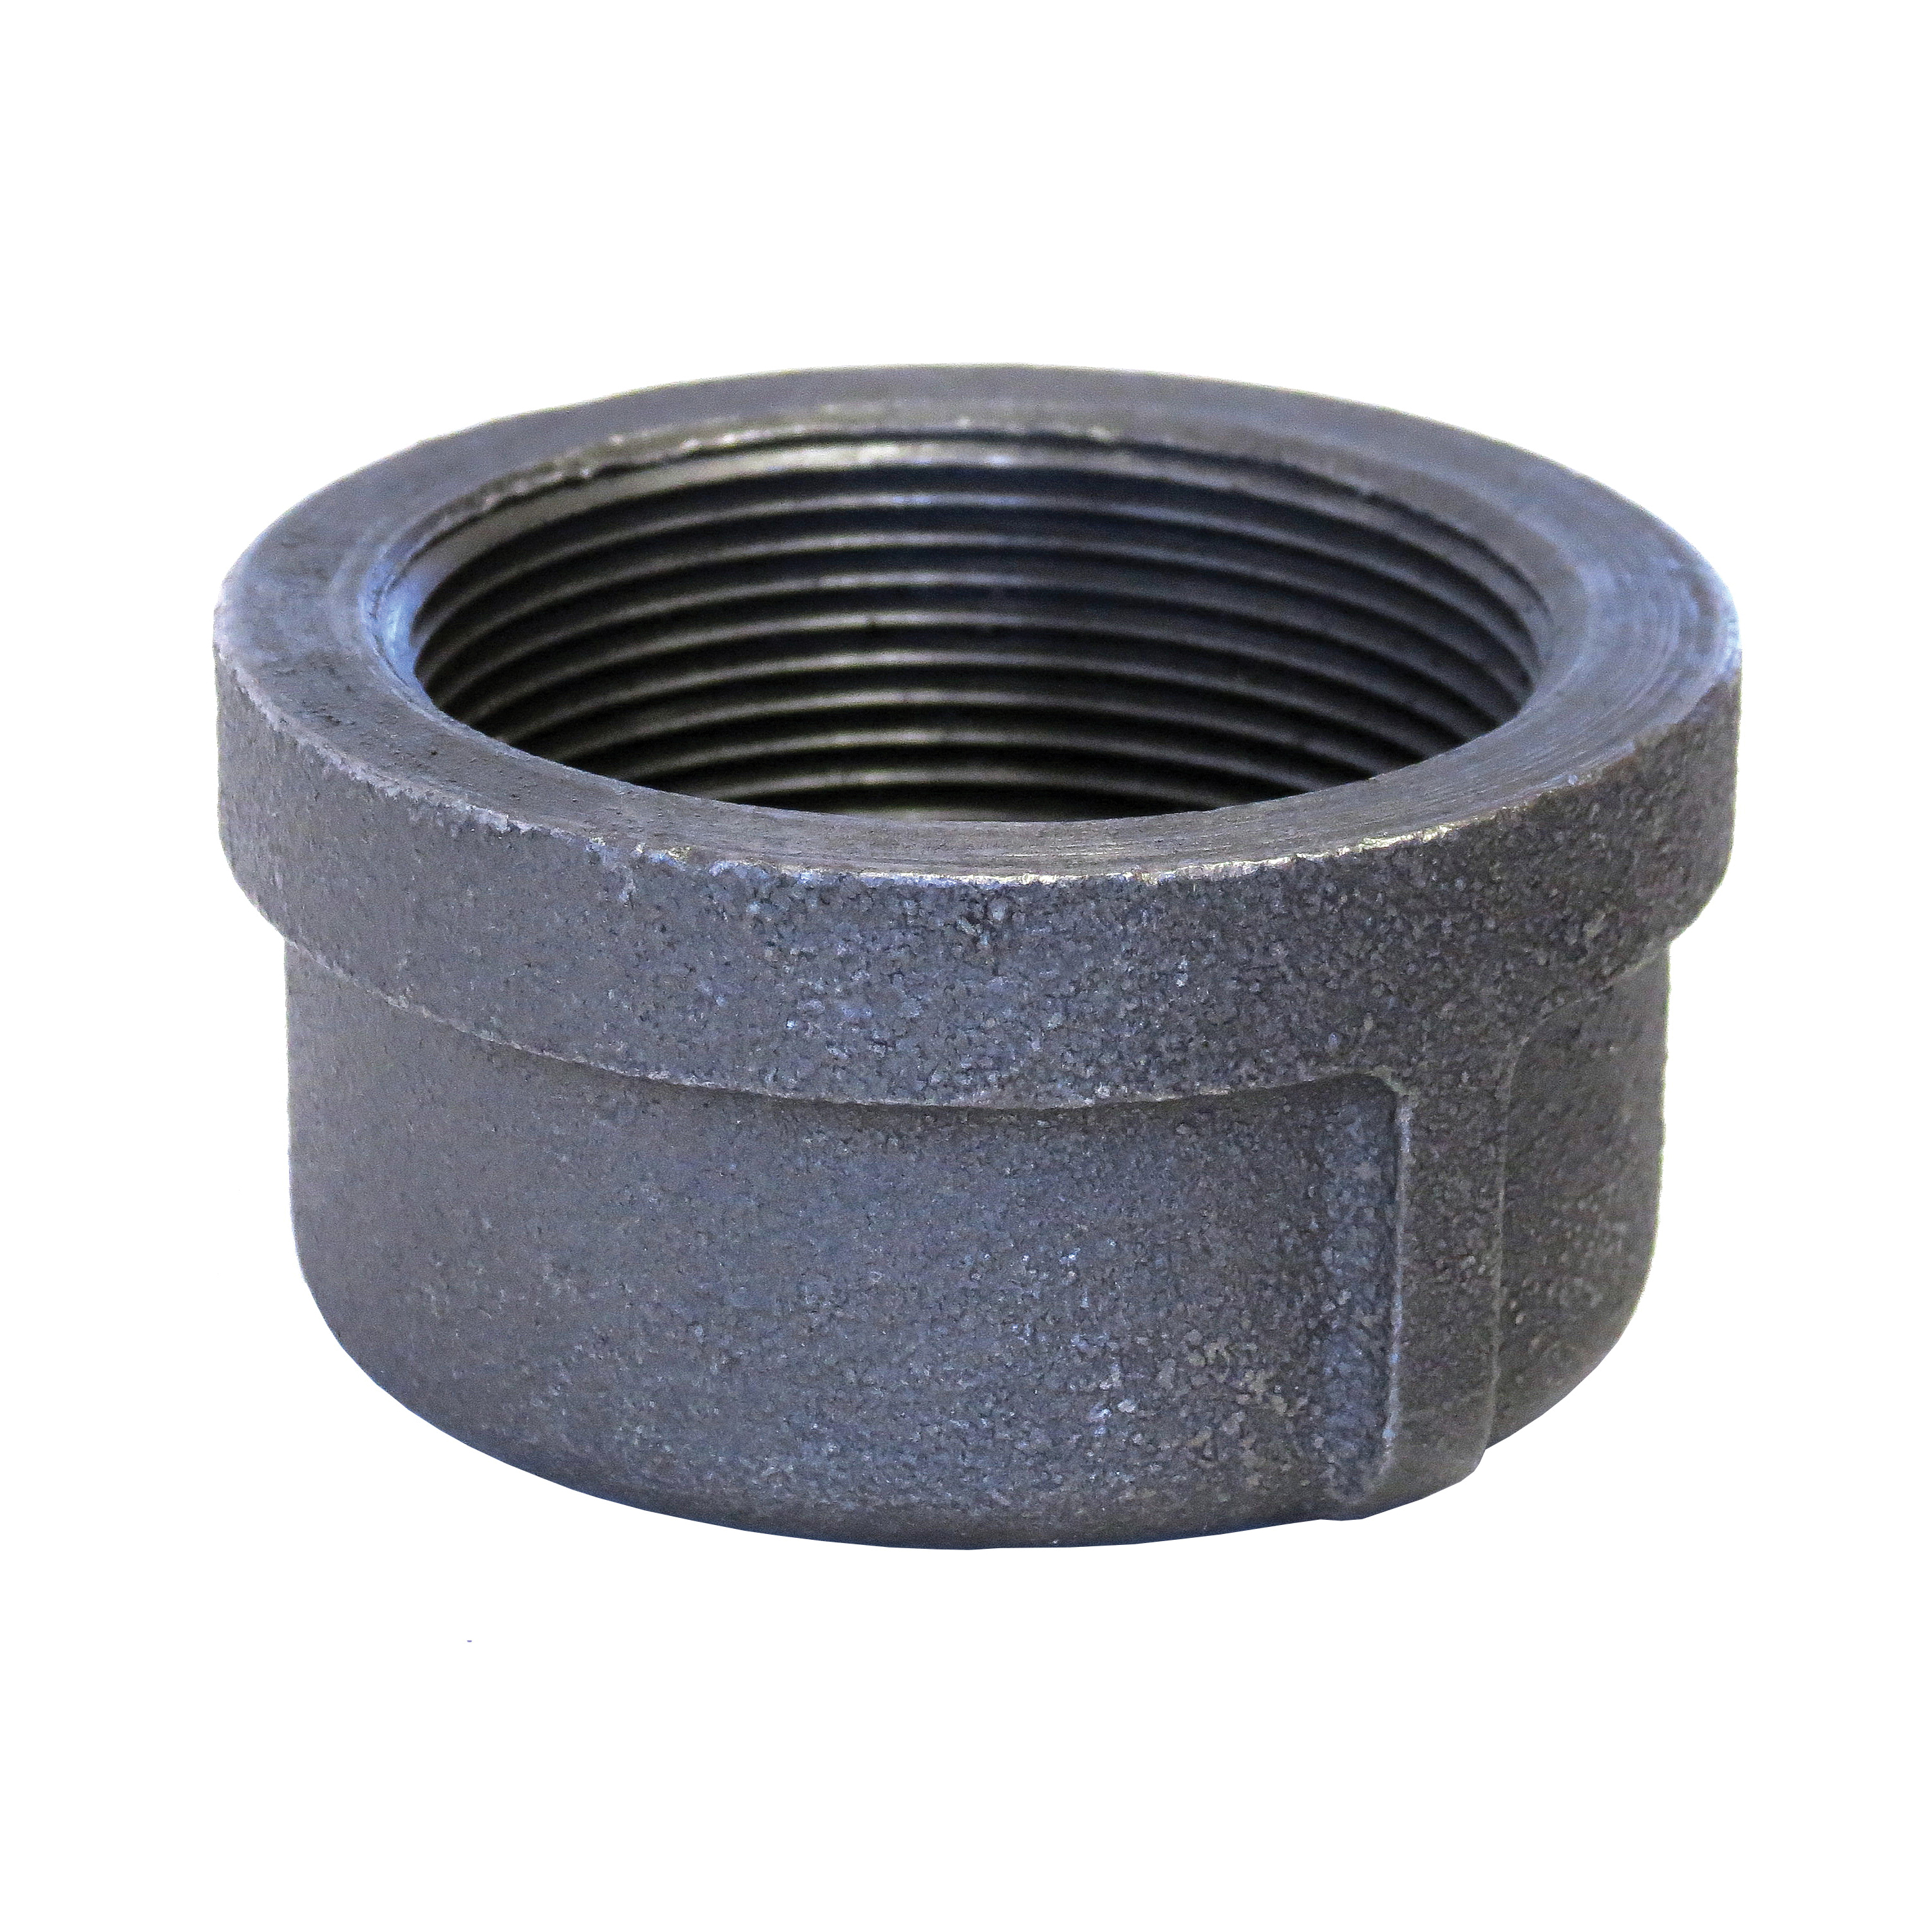 Anvil® 0318900008 Standard Pipe Cap, 1/8 in Nominal, FNPT End Style, 150 lb, Merchant Steel, Black Oxide, Domestic